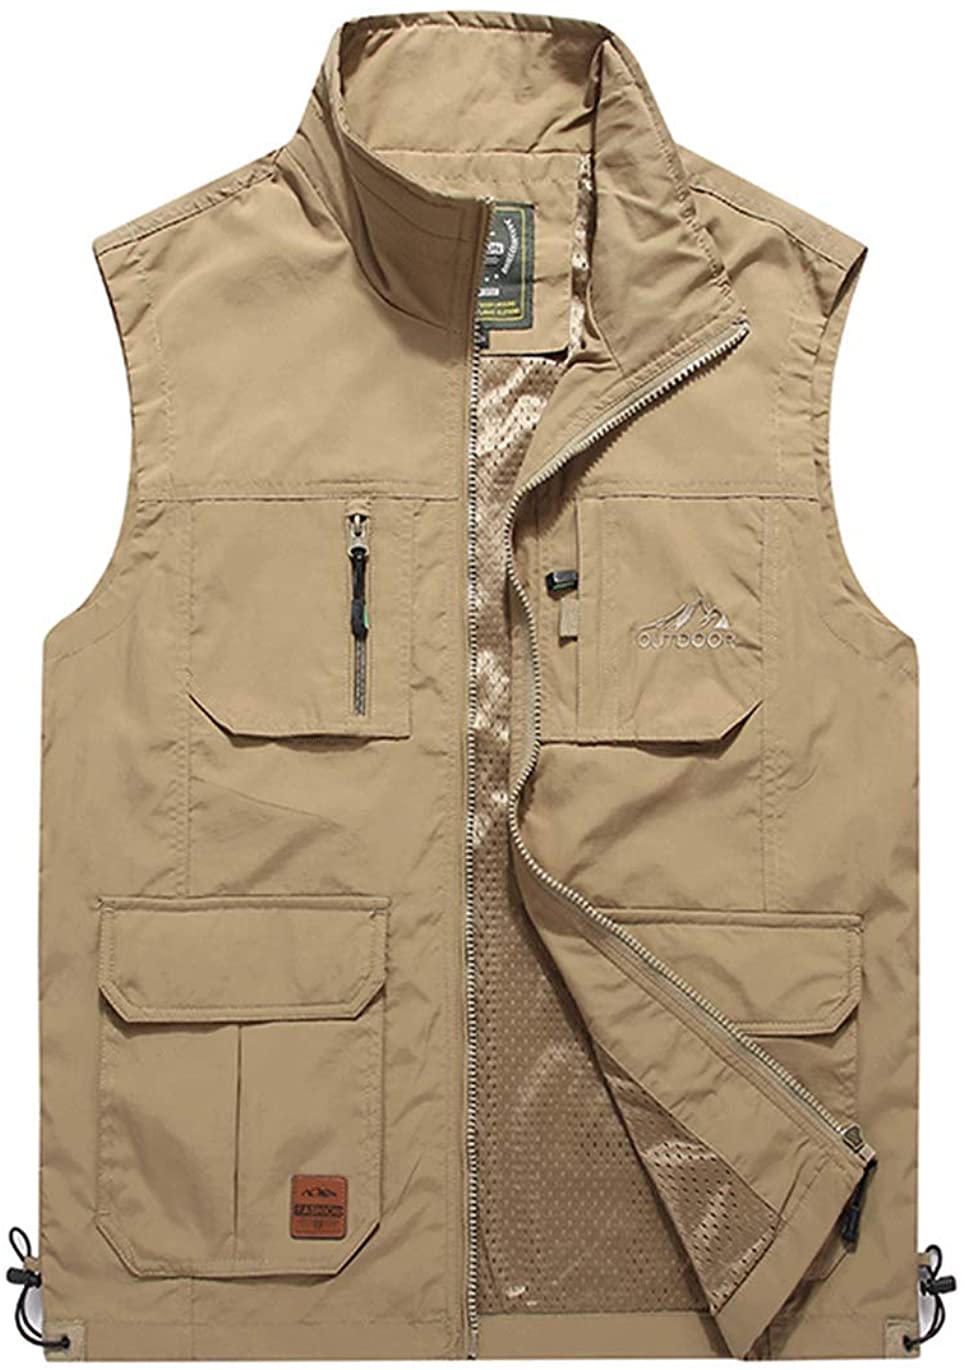 Haellun Mens Outdoor Vests Safari Fishing Travel Multi Pockets Vest with Hood